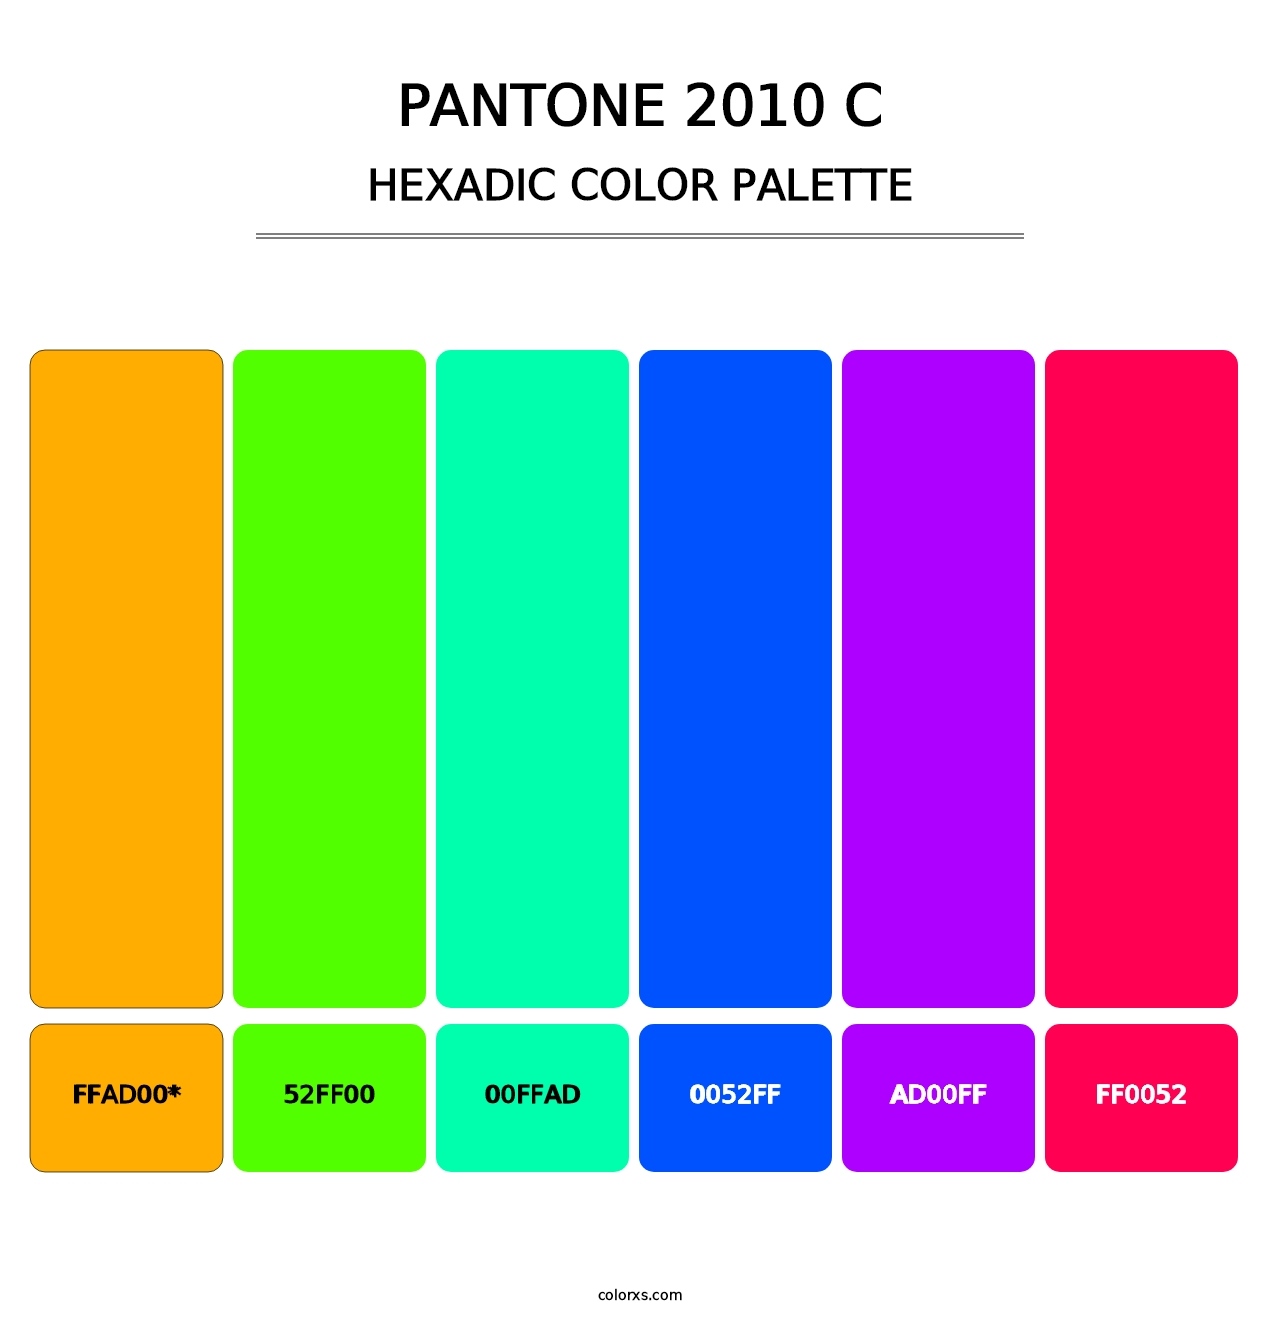 PANTONE 2010 C - Hexadic Color Palette